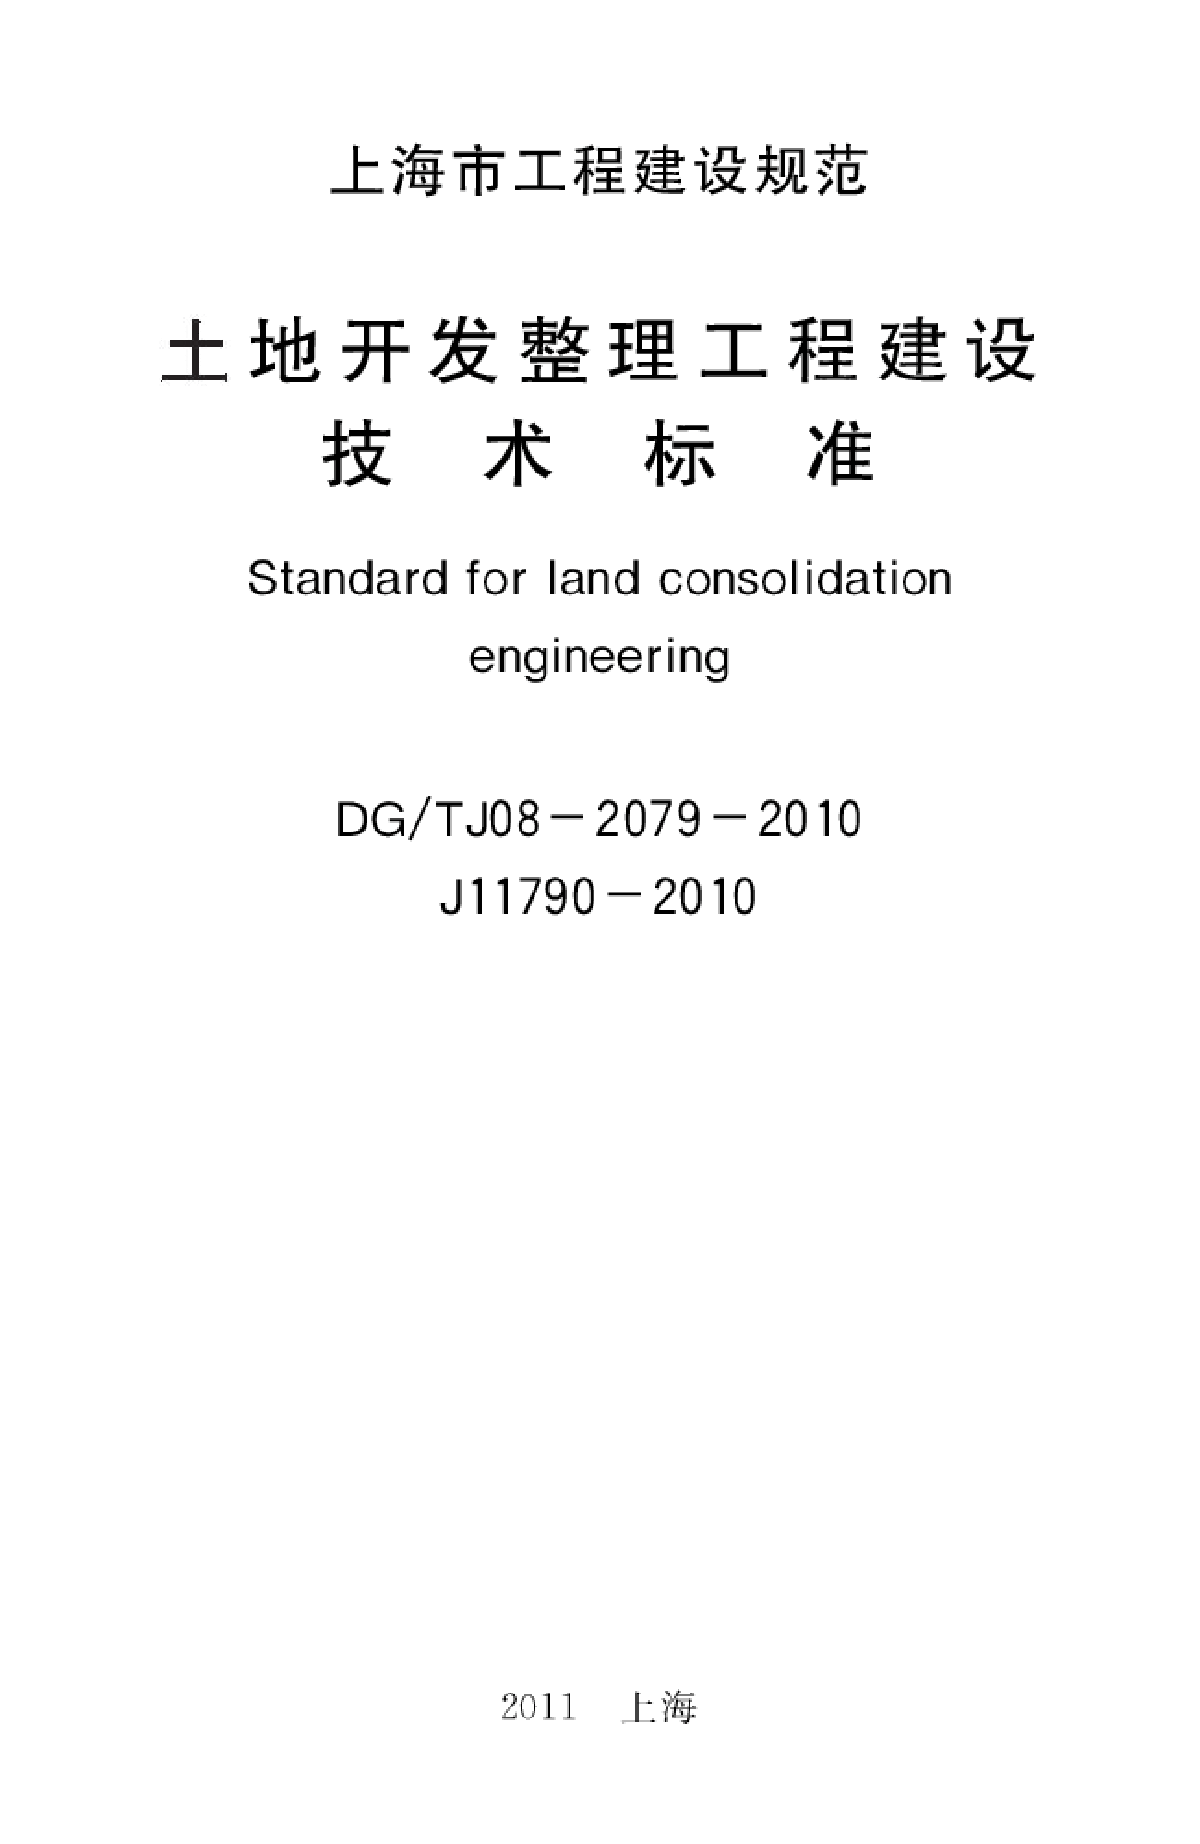 DGTJ08-2079-2010 土地开发整理工程建设技术标准-图二